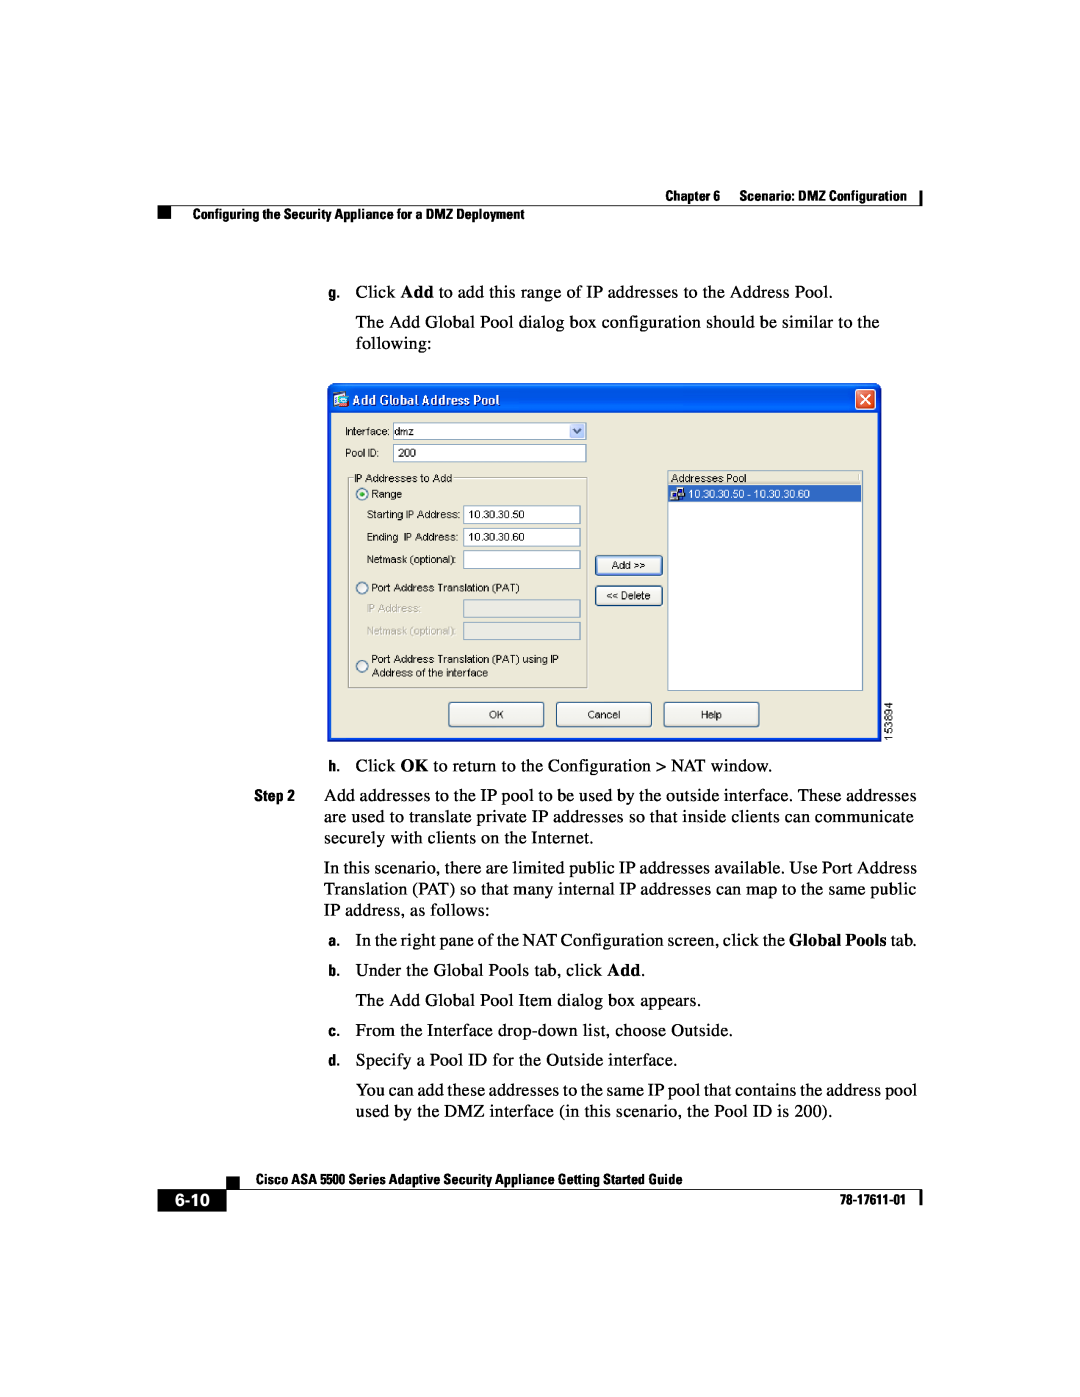 Cisco Systems ASA 5500 manual b.Under the Global Pools tab, click Add, 6-10 